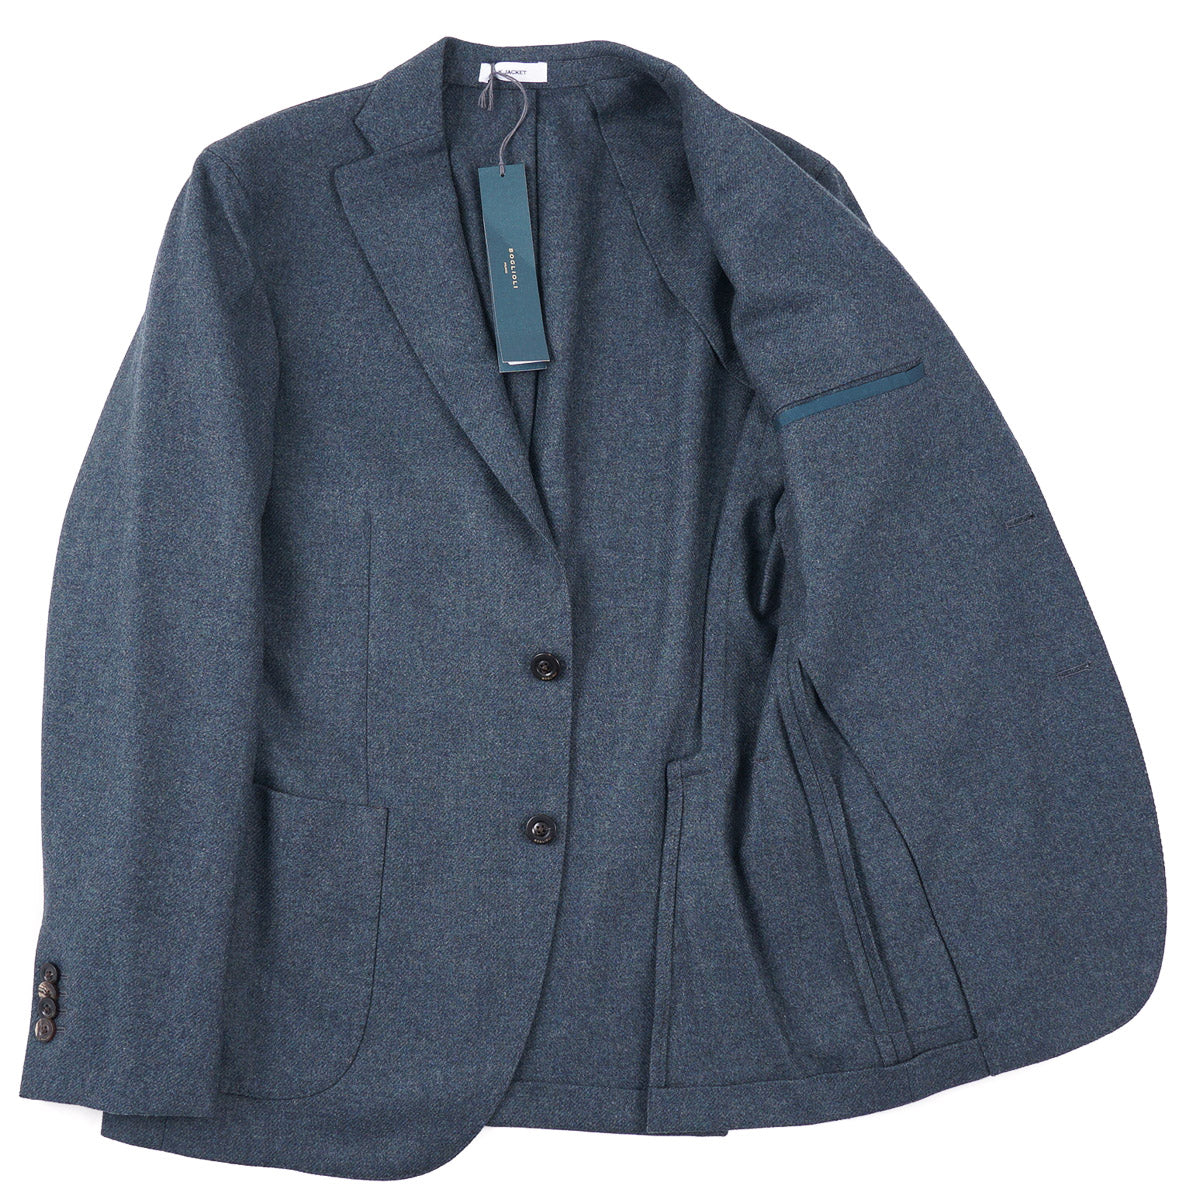 Boglioli Soft Wool K-Jacket Sport Coat - Top Shelf Apparel